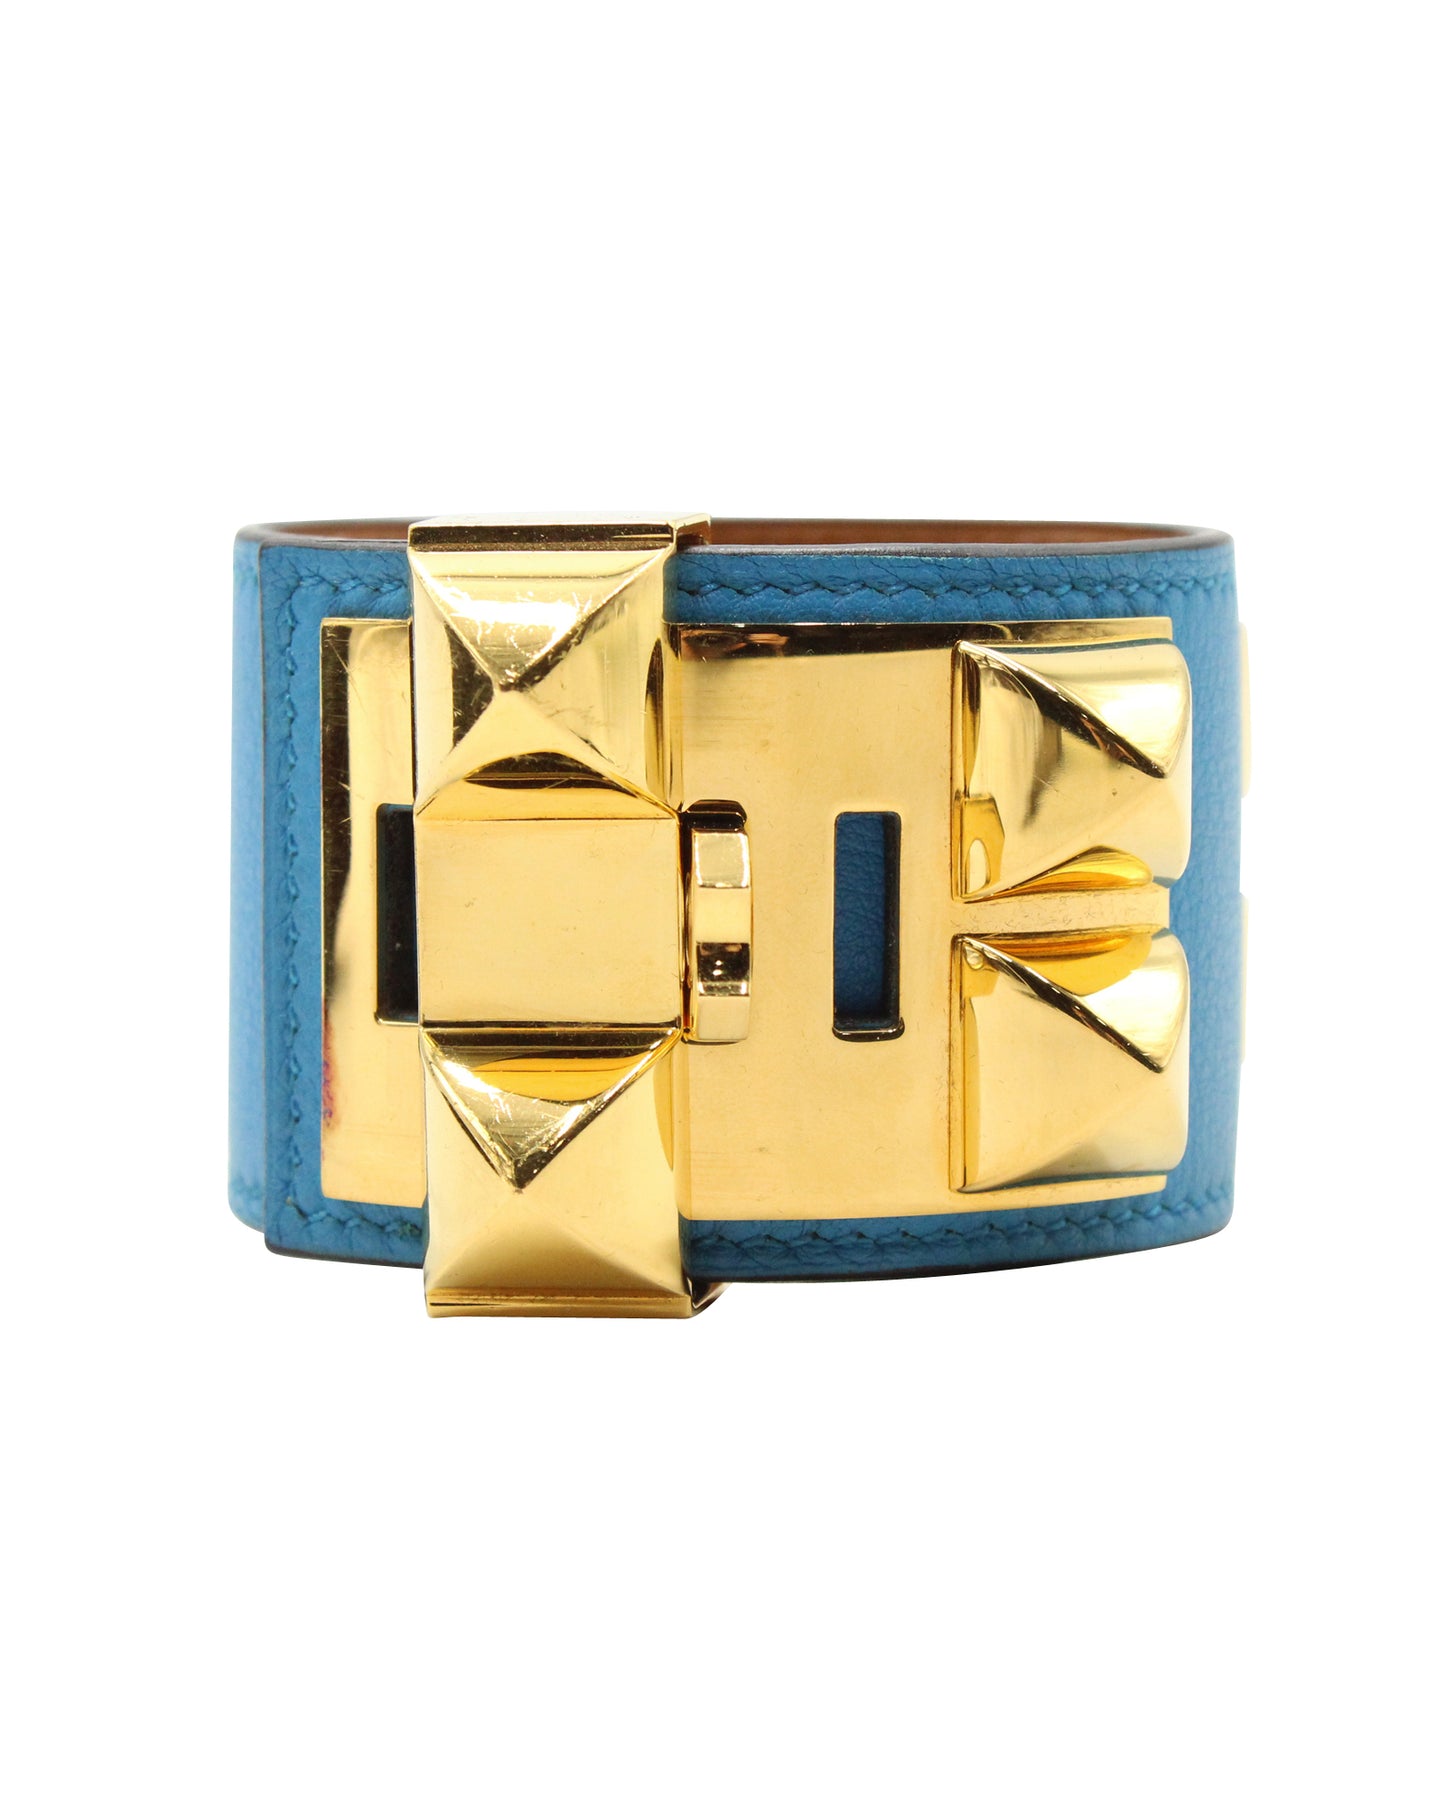 Collier de Chien Bracelet in Bleu Izmir Swift Leather with Gold Hardware